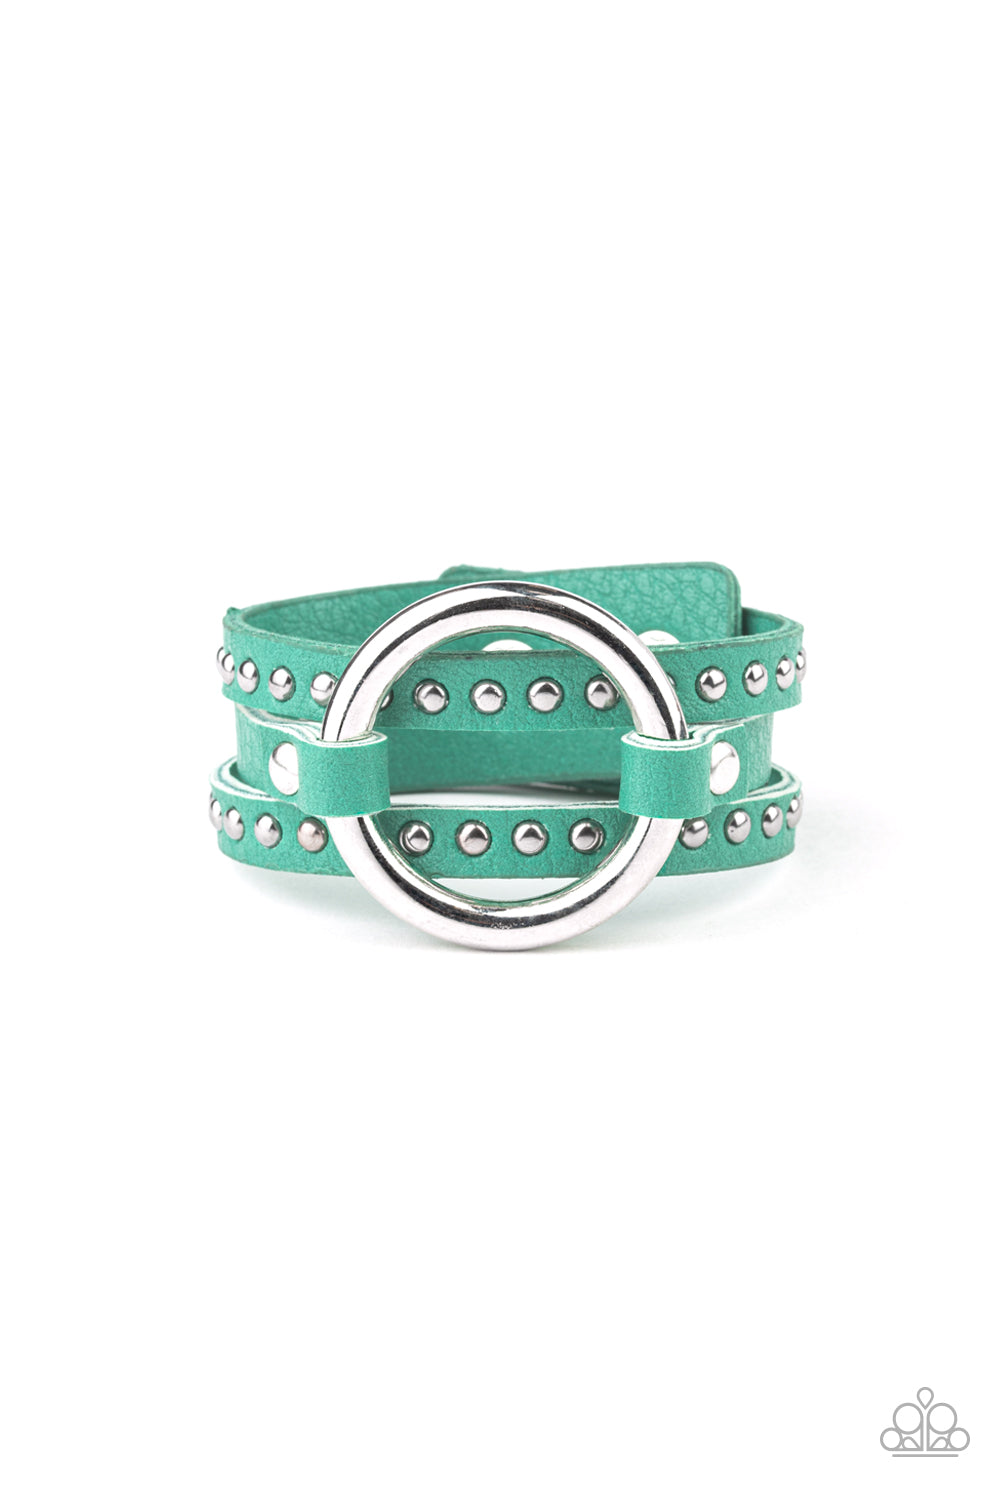 Studded Statement-Maker Green Bracelet - Paparazzi Accessories